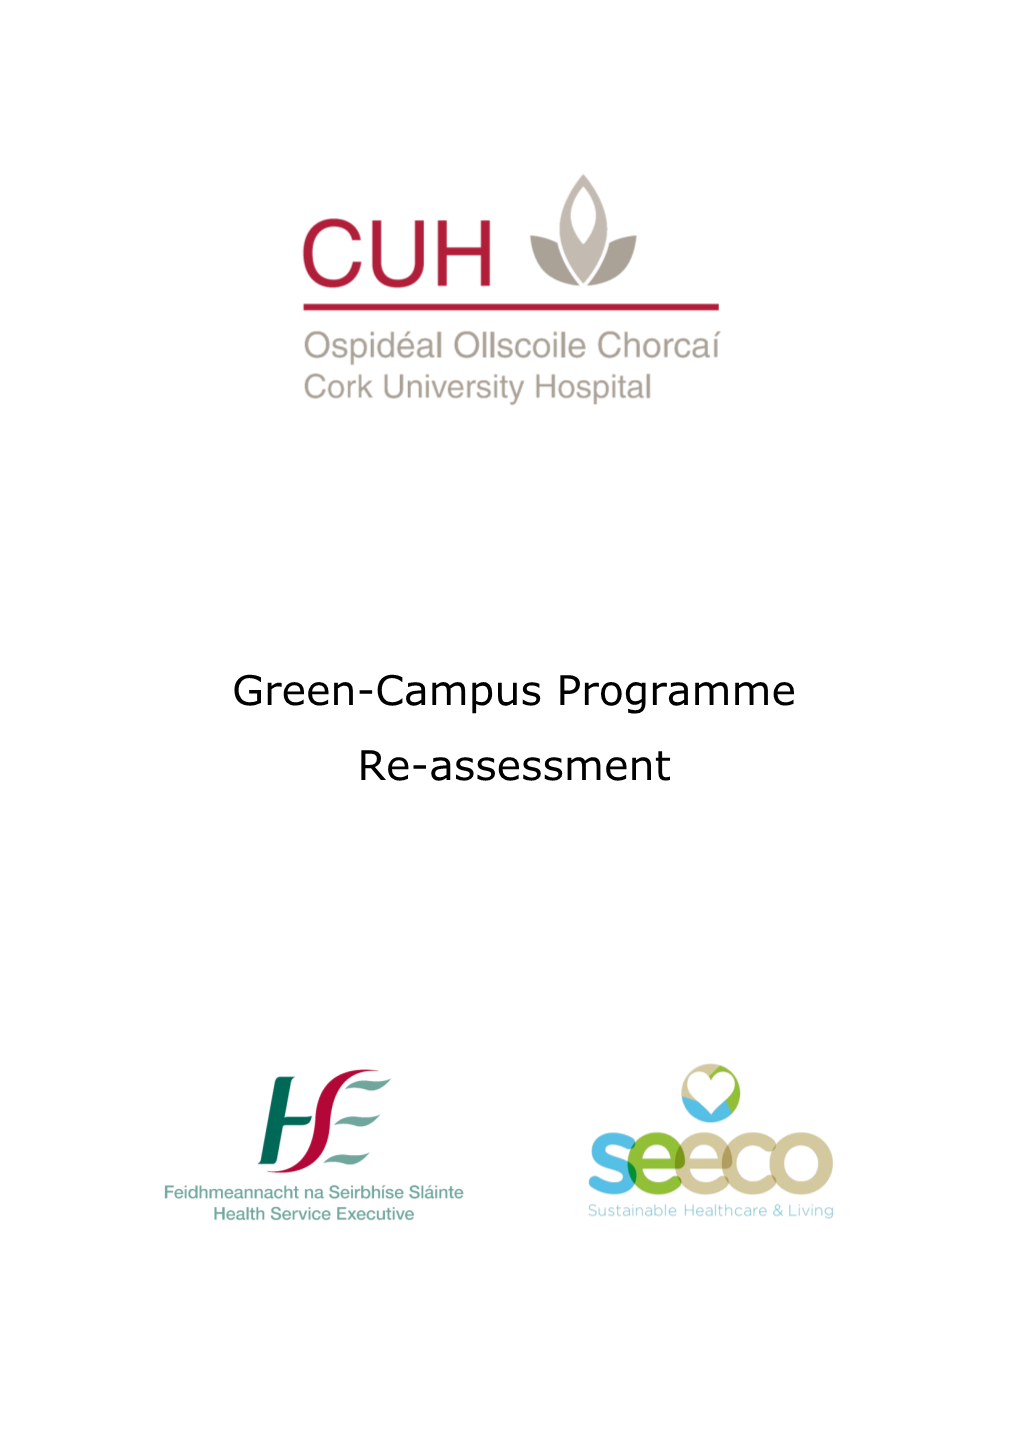 Green-Campus Programme Re-Assessment